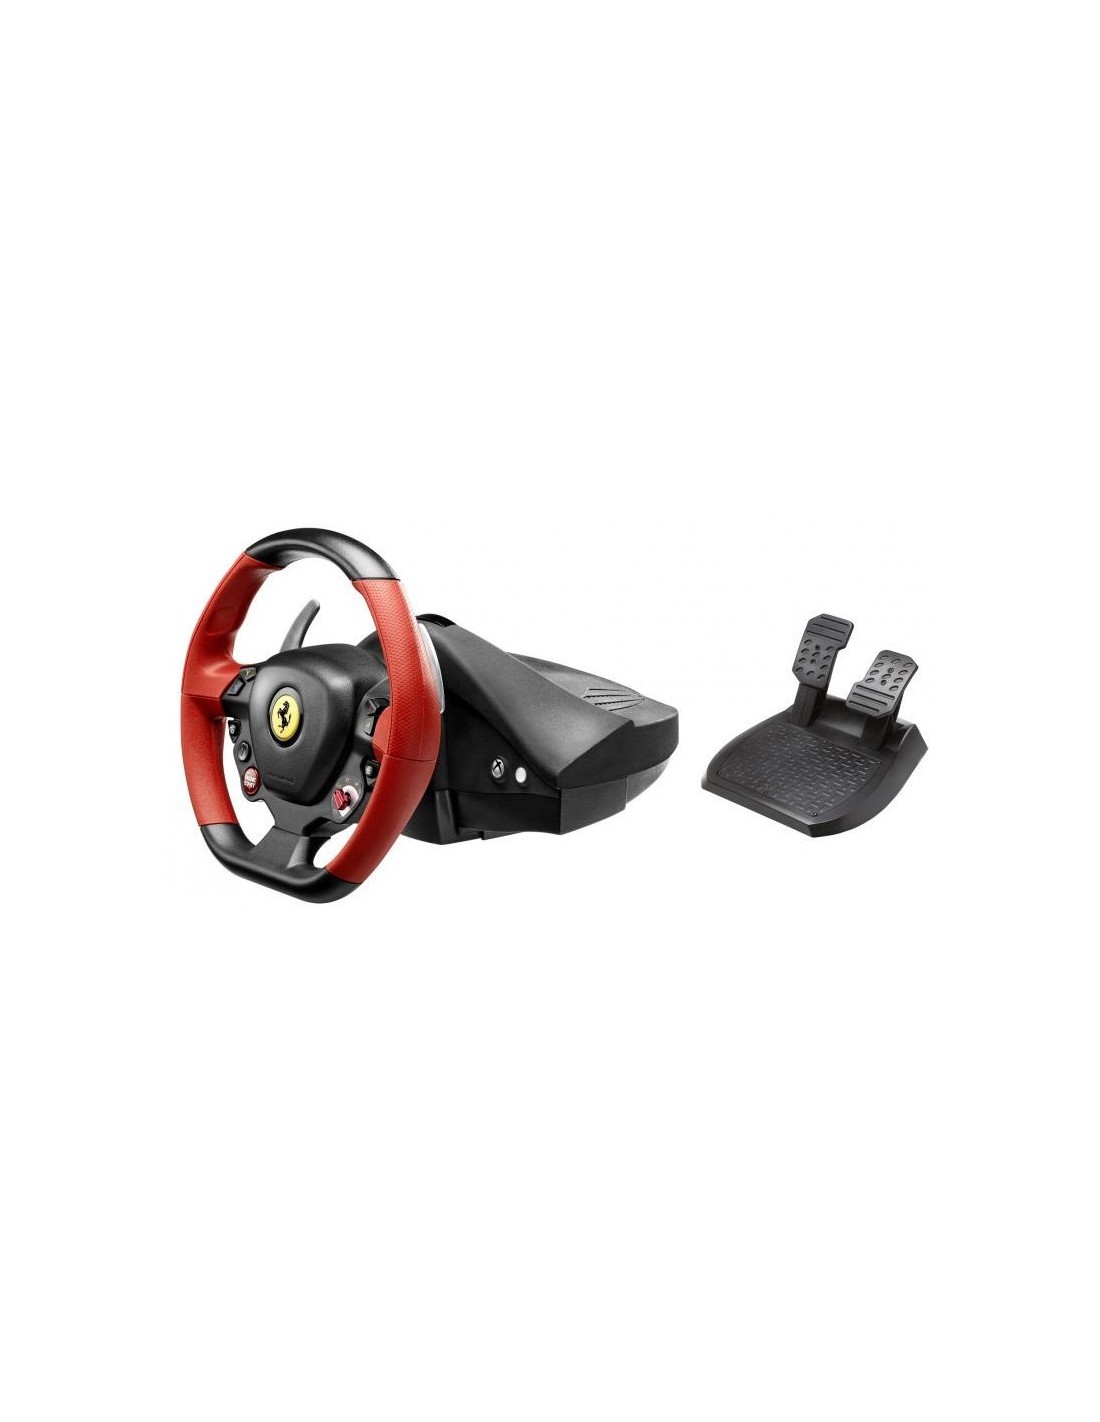 Pack volante y pedales Thrustmaster Ferrari T458 Spider negro y rojo para Xbox  One